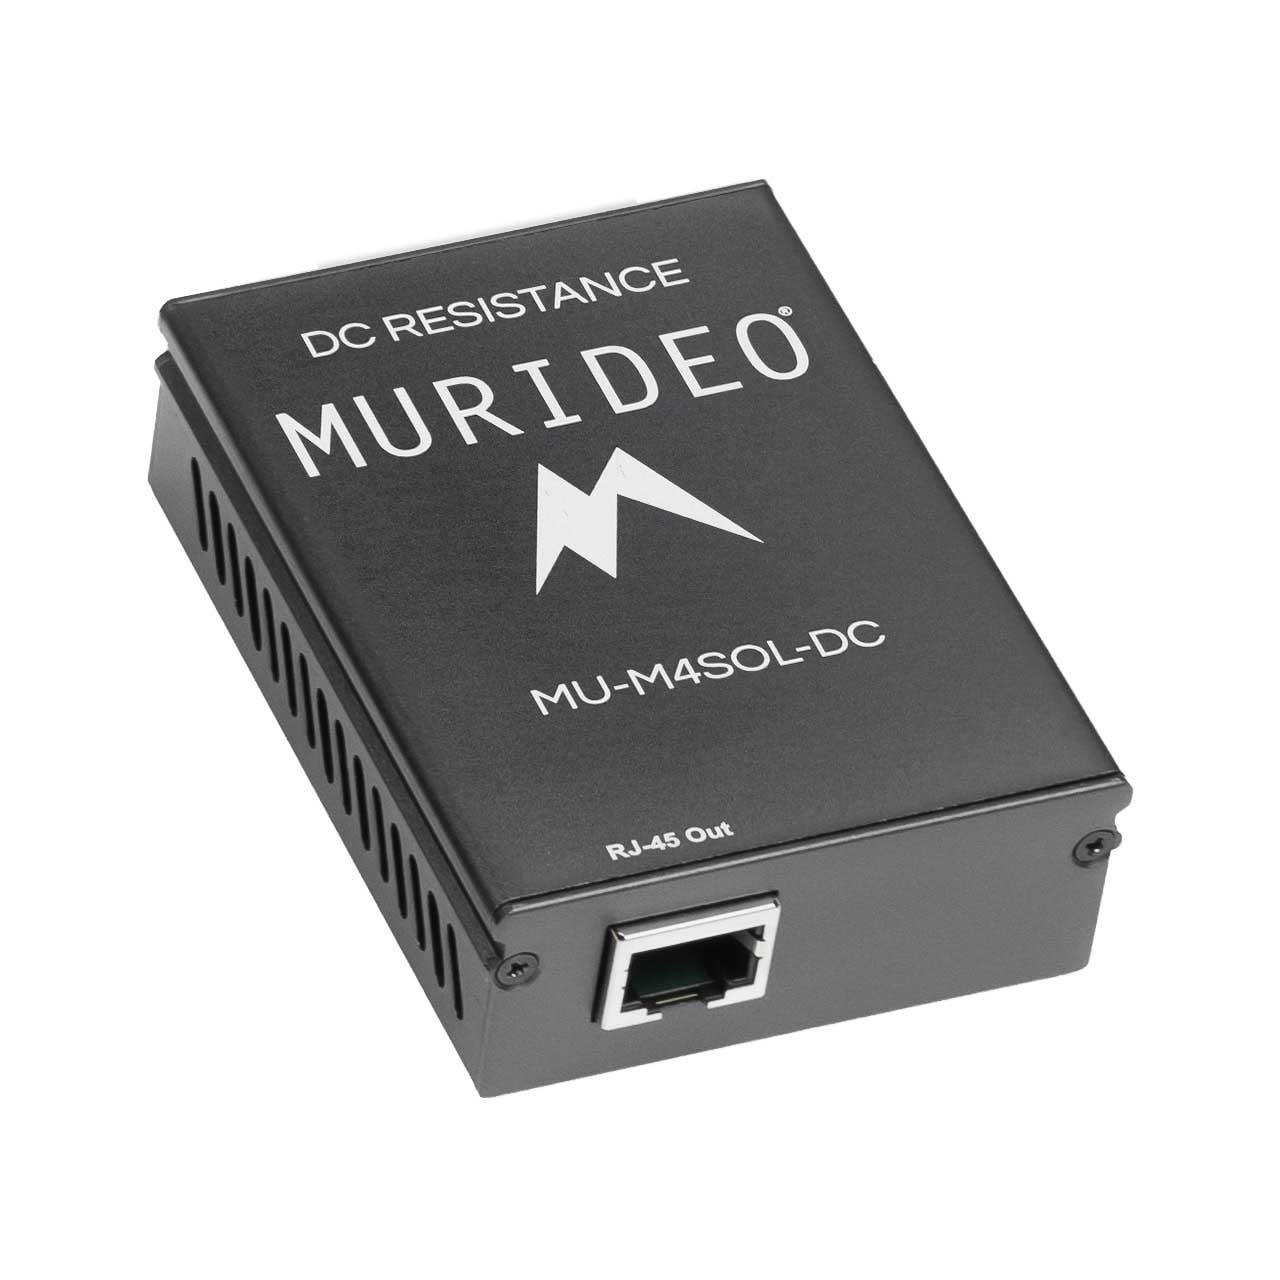 Murideo MU-M4SOL-DC DC Resistance Add On Module